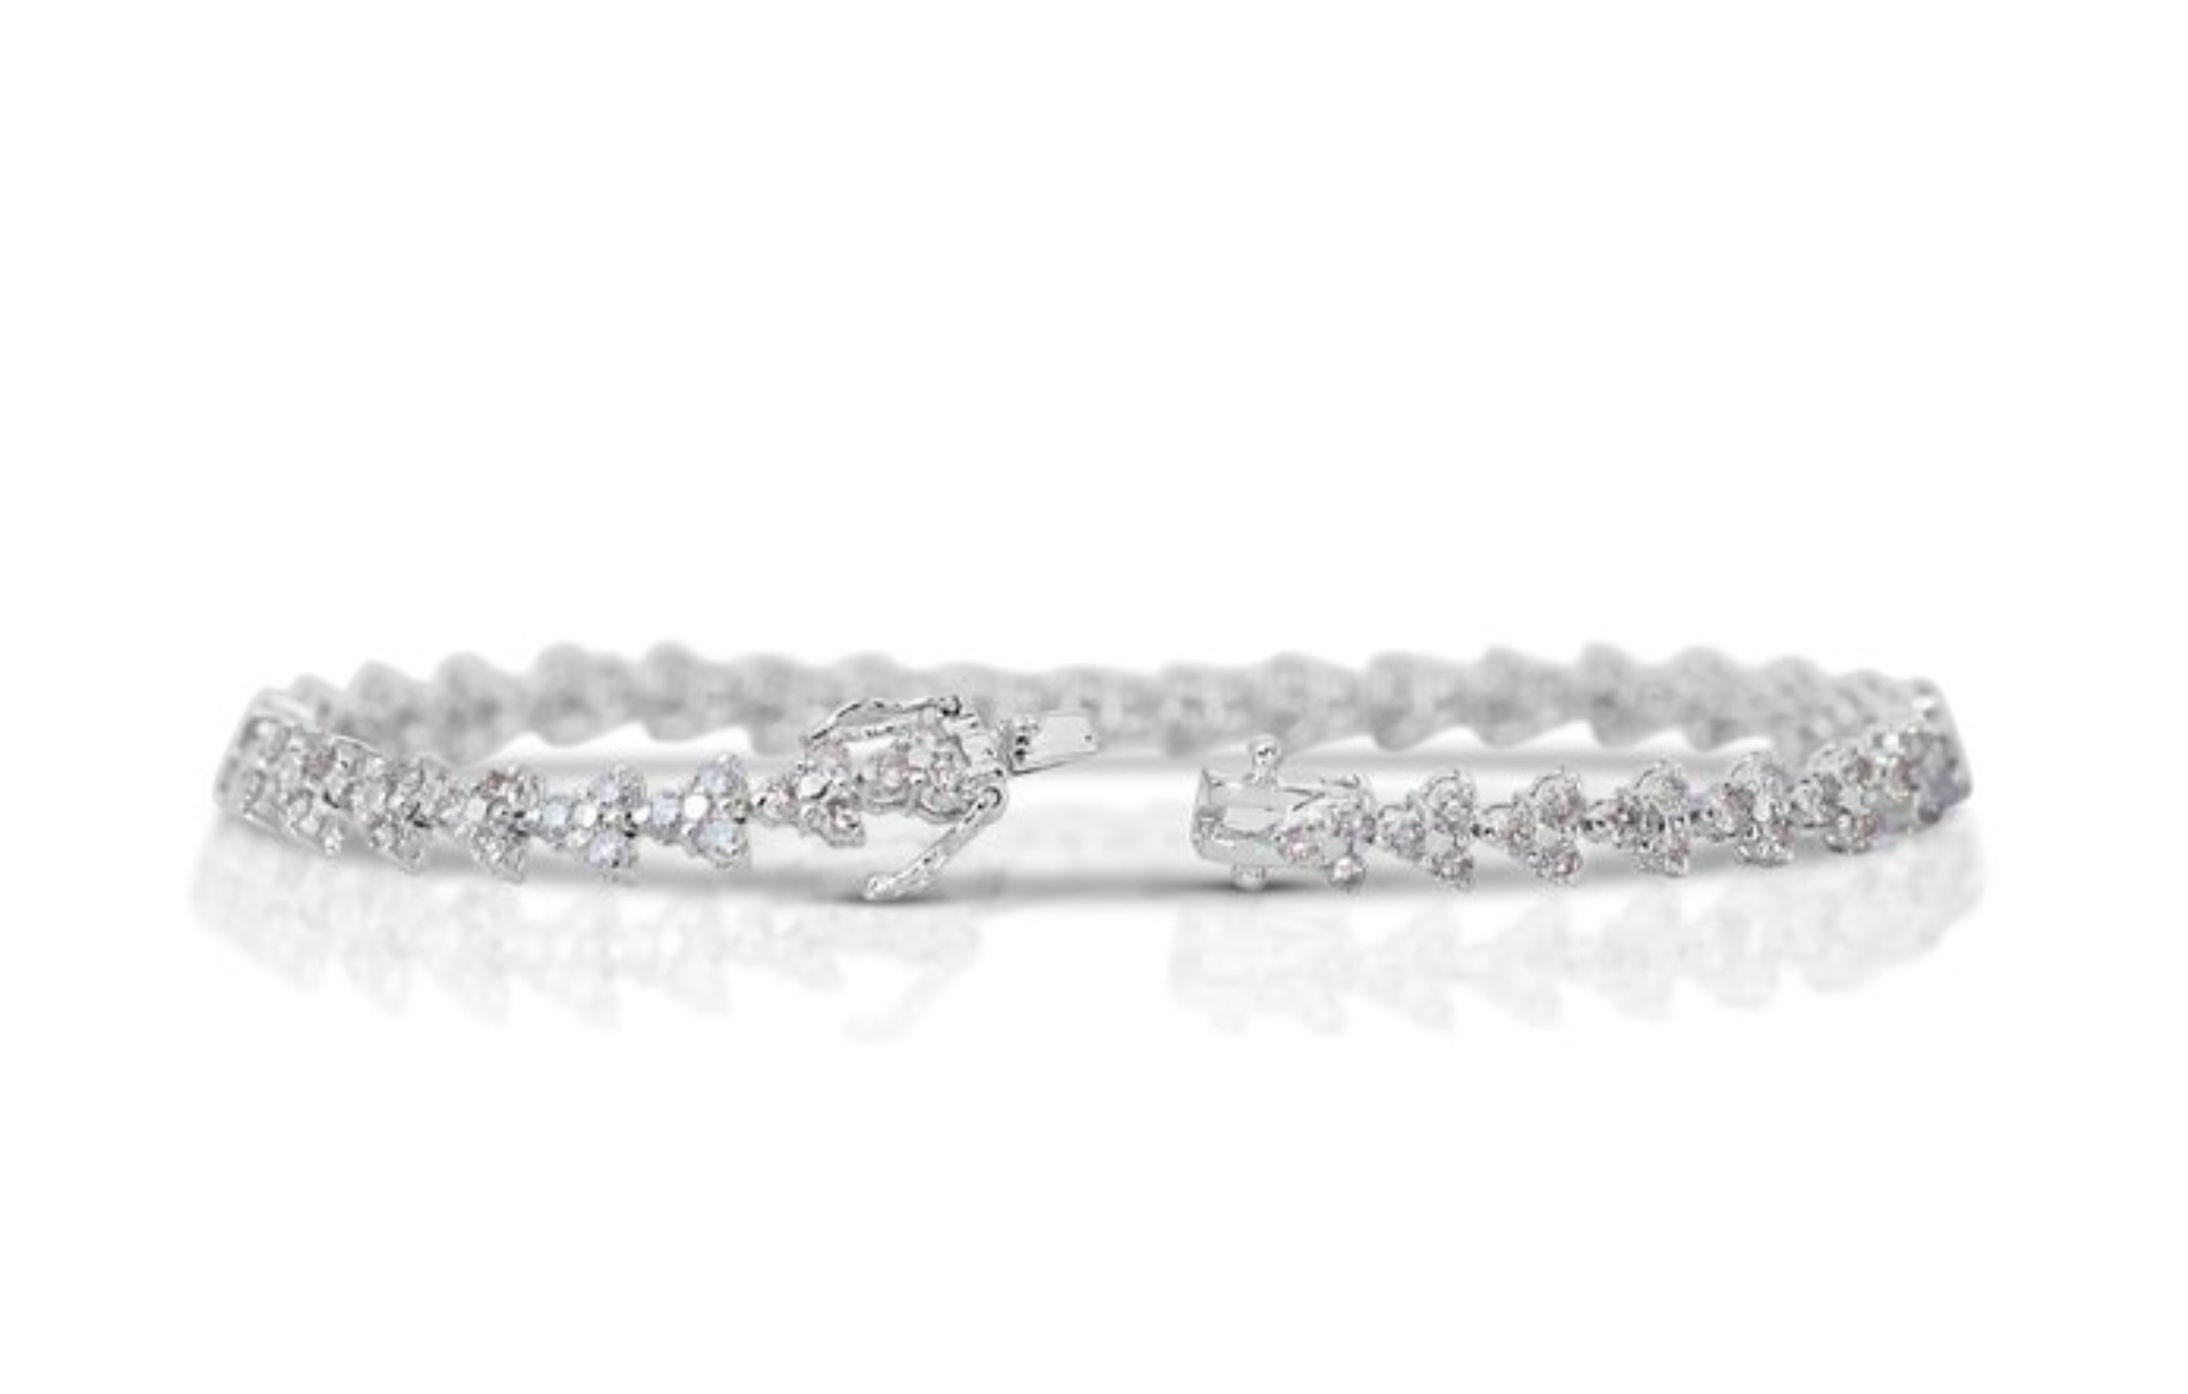 Exquisite 3.75ct Round Diamond Bracelet set in 14K White Gold For Sale 1